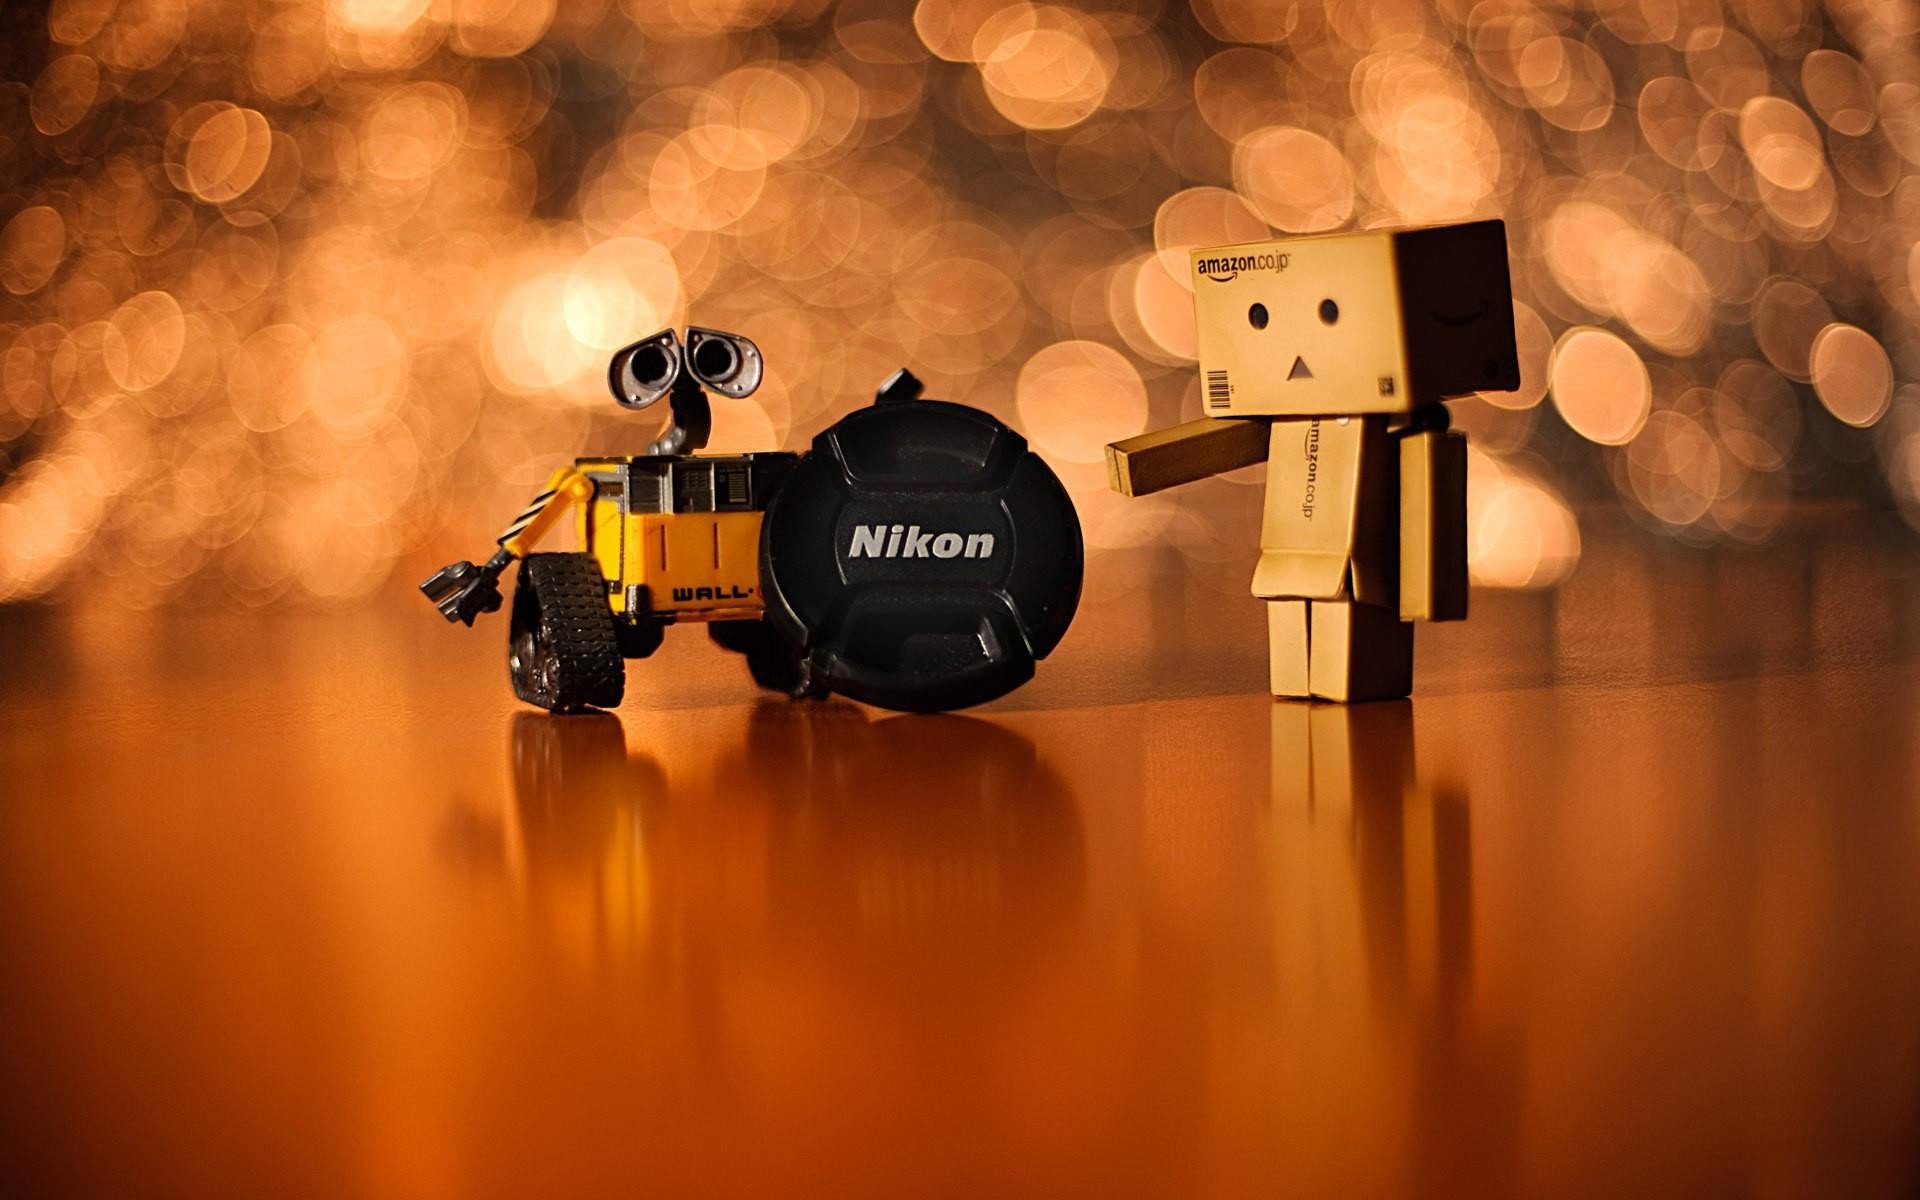 Nikon Danbo Wall E Hd Wallpapers Desktop And Mobile Images Photos